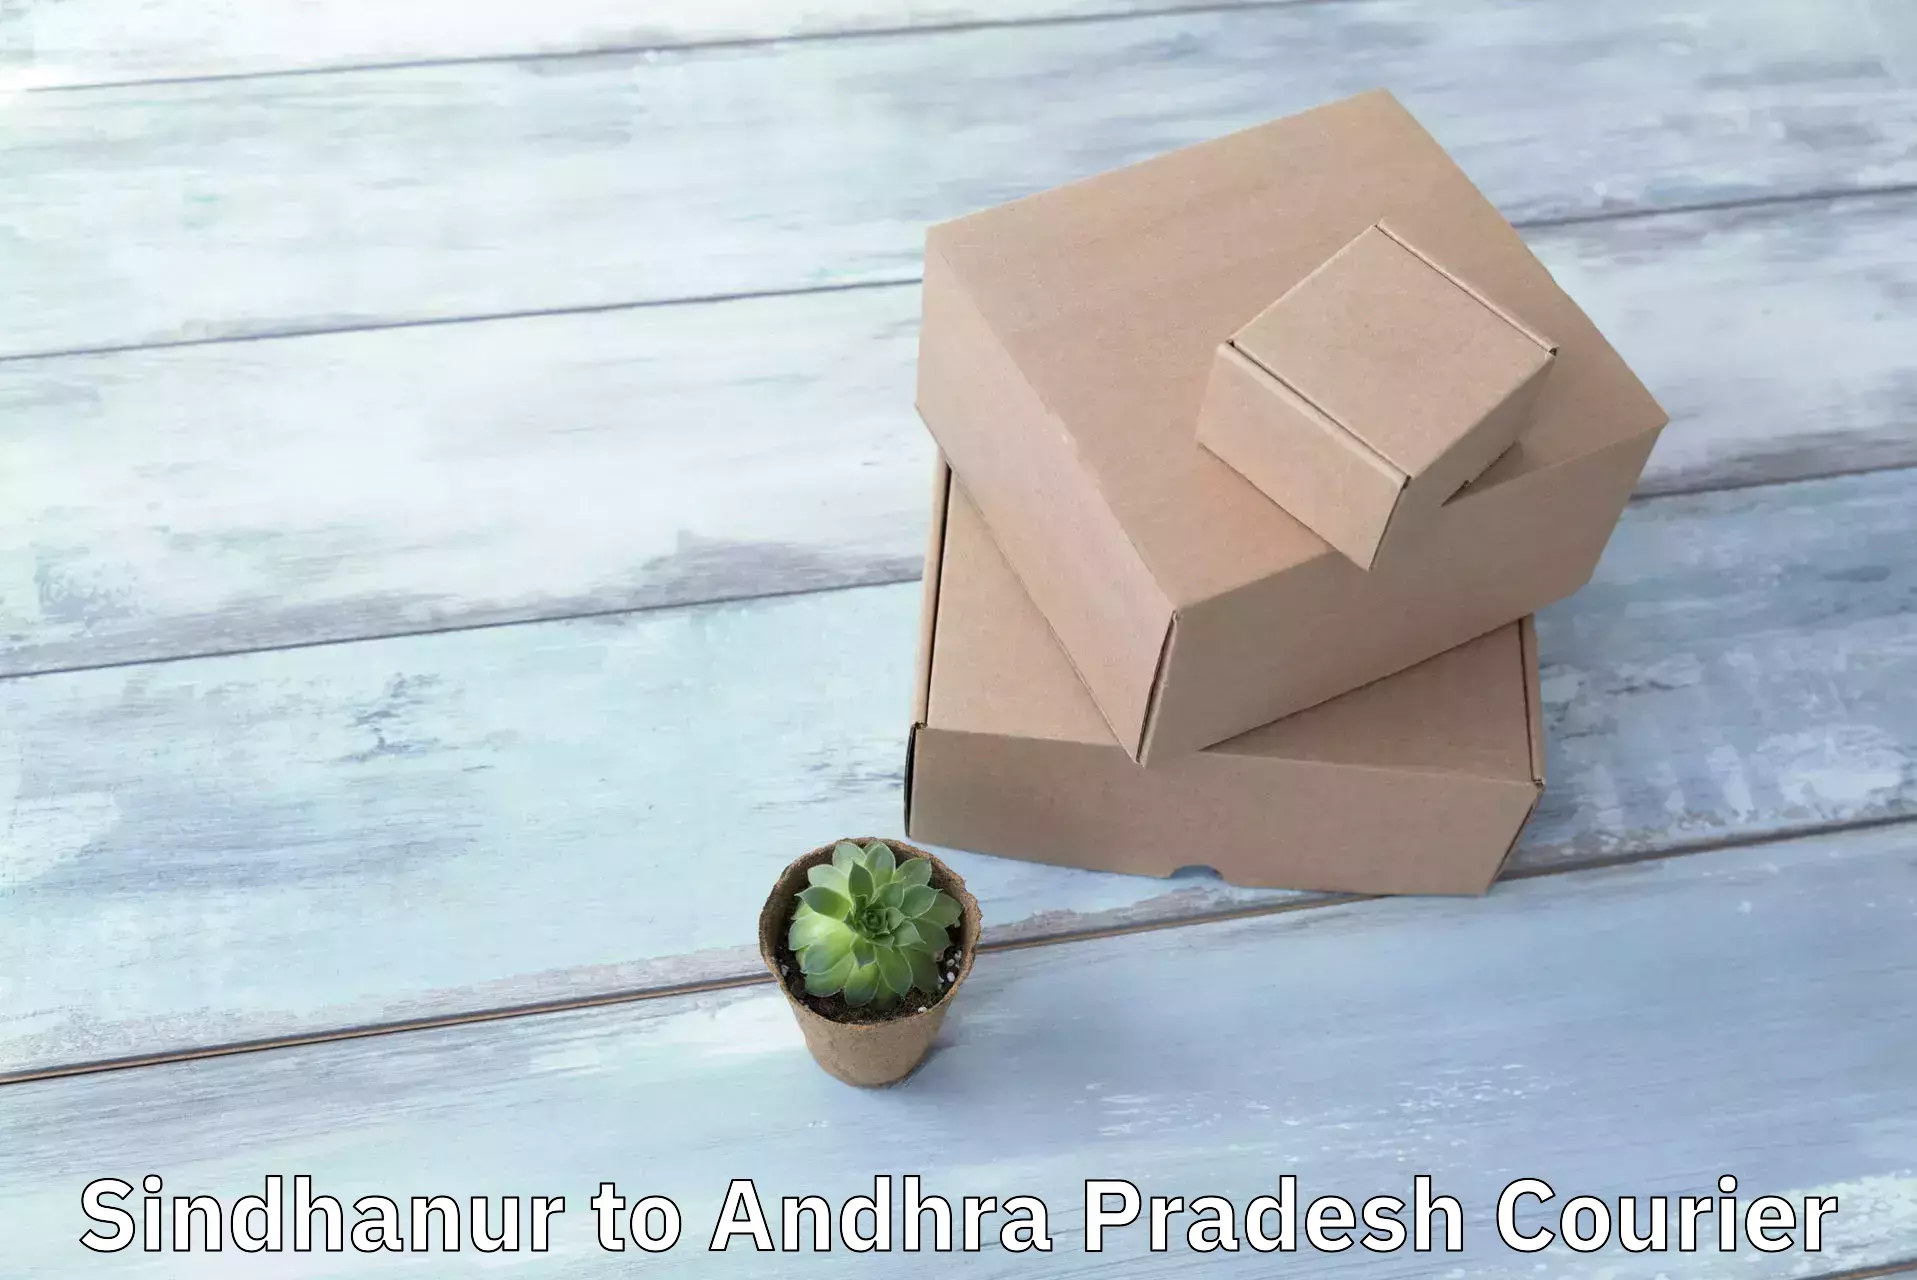 Courier service efficiency Sindhanur to Paderu